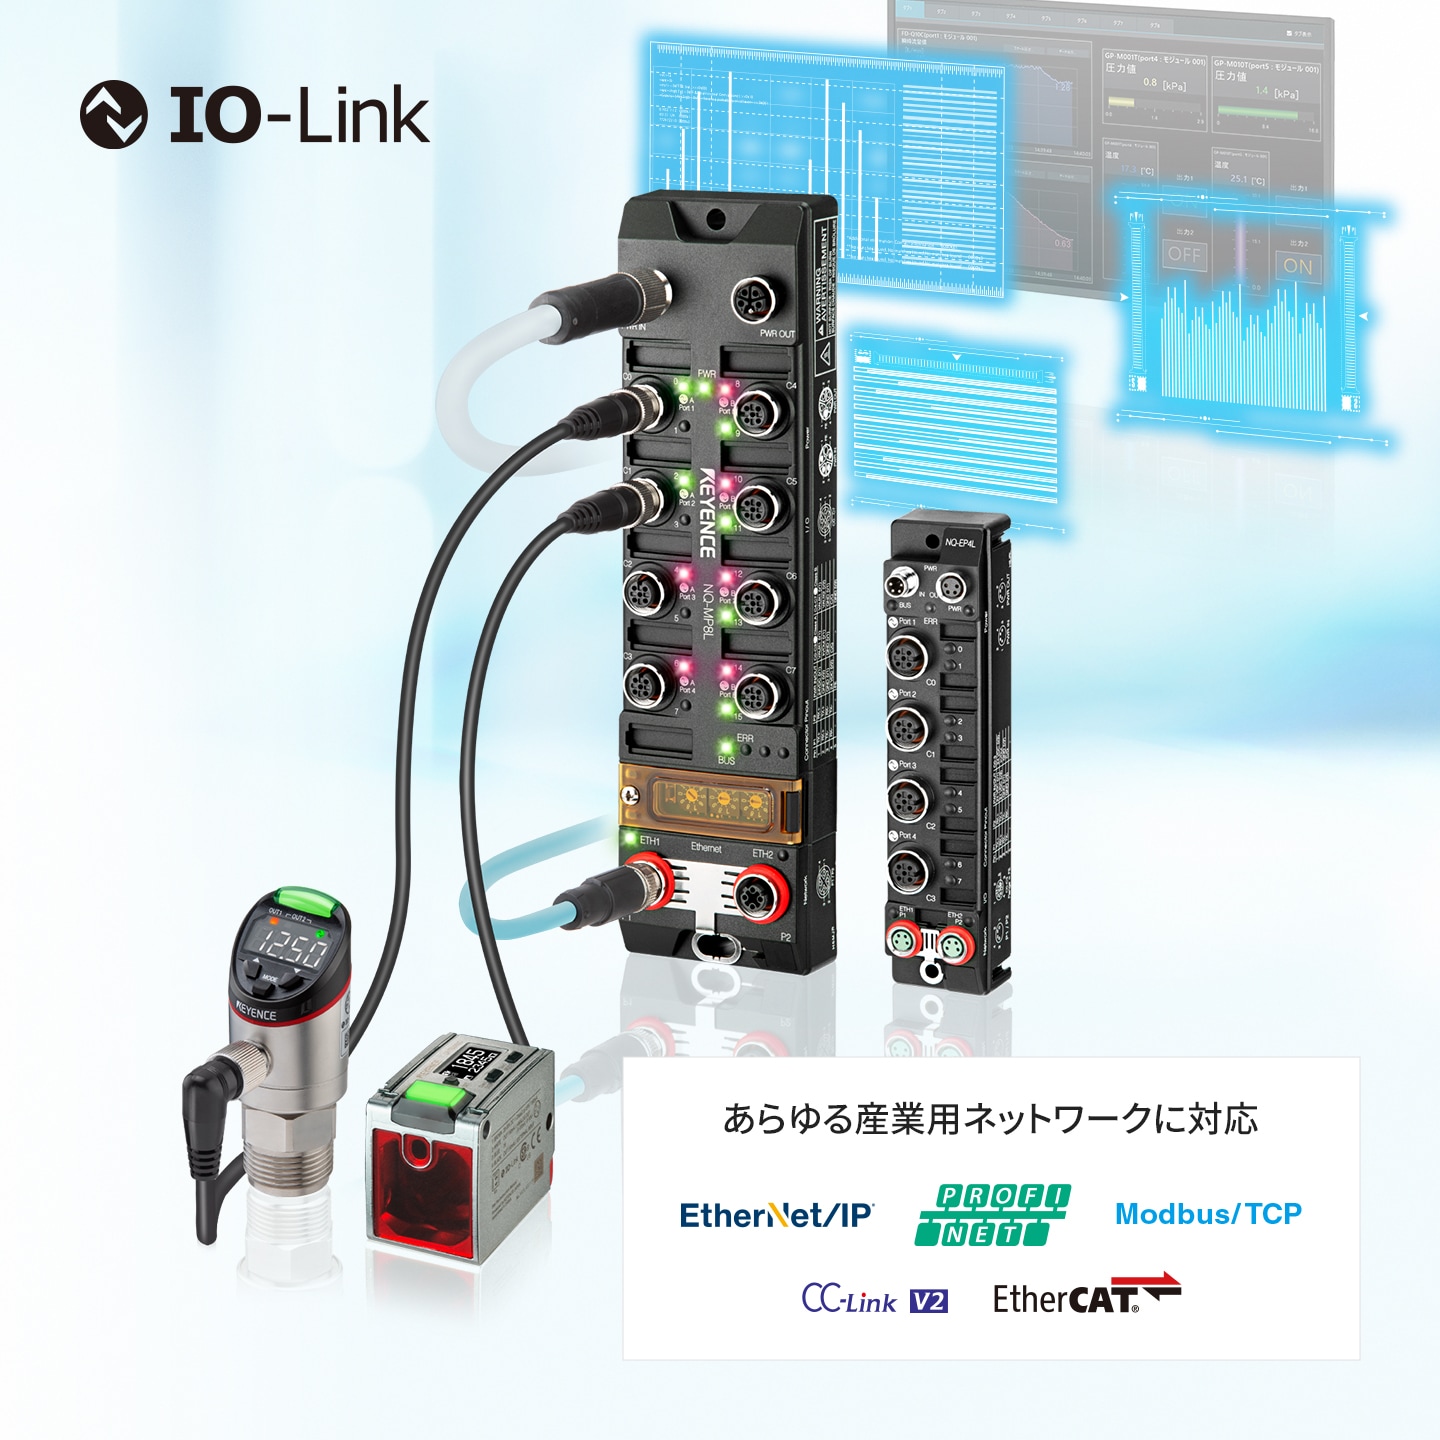 IO-Link あらゆる産業用ネットワークに対応：EtherNet/IP,PROFINET,Modbus/TCP,CC-Link V2,EtherCAT